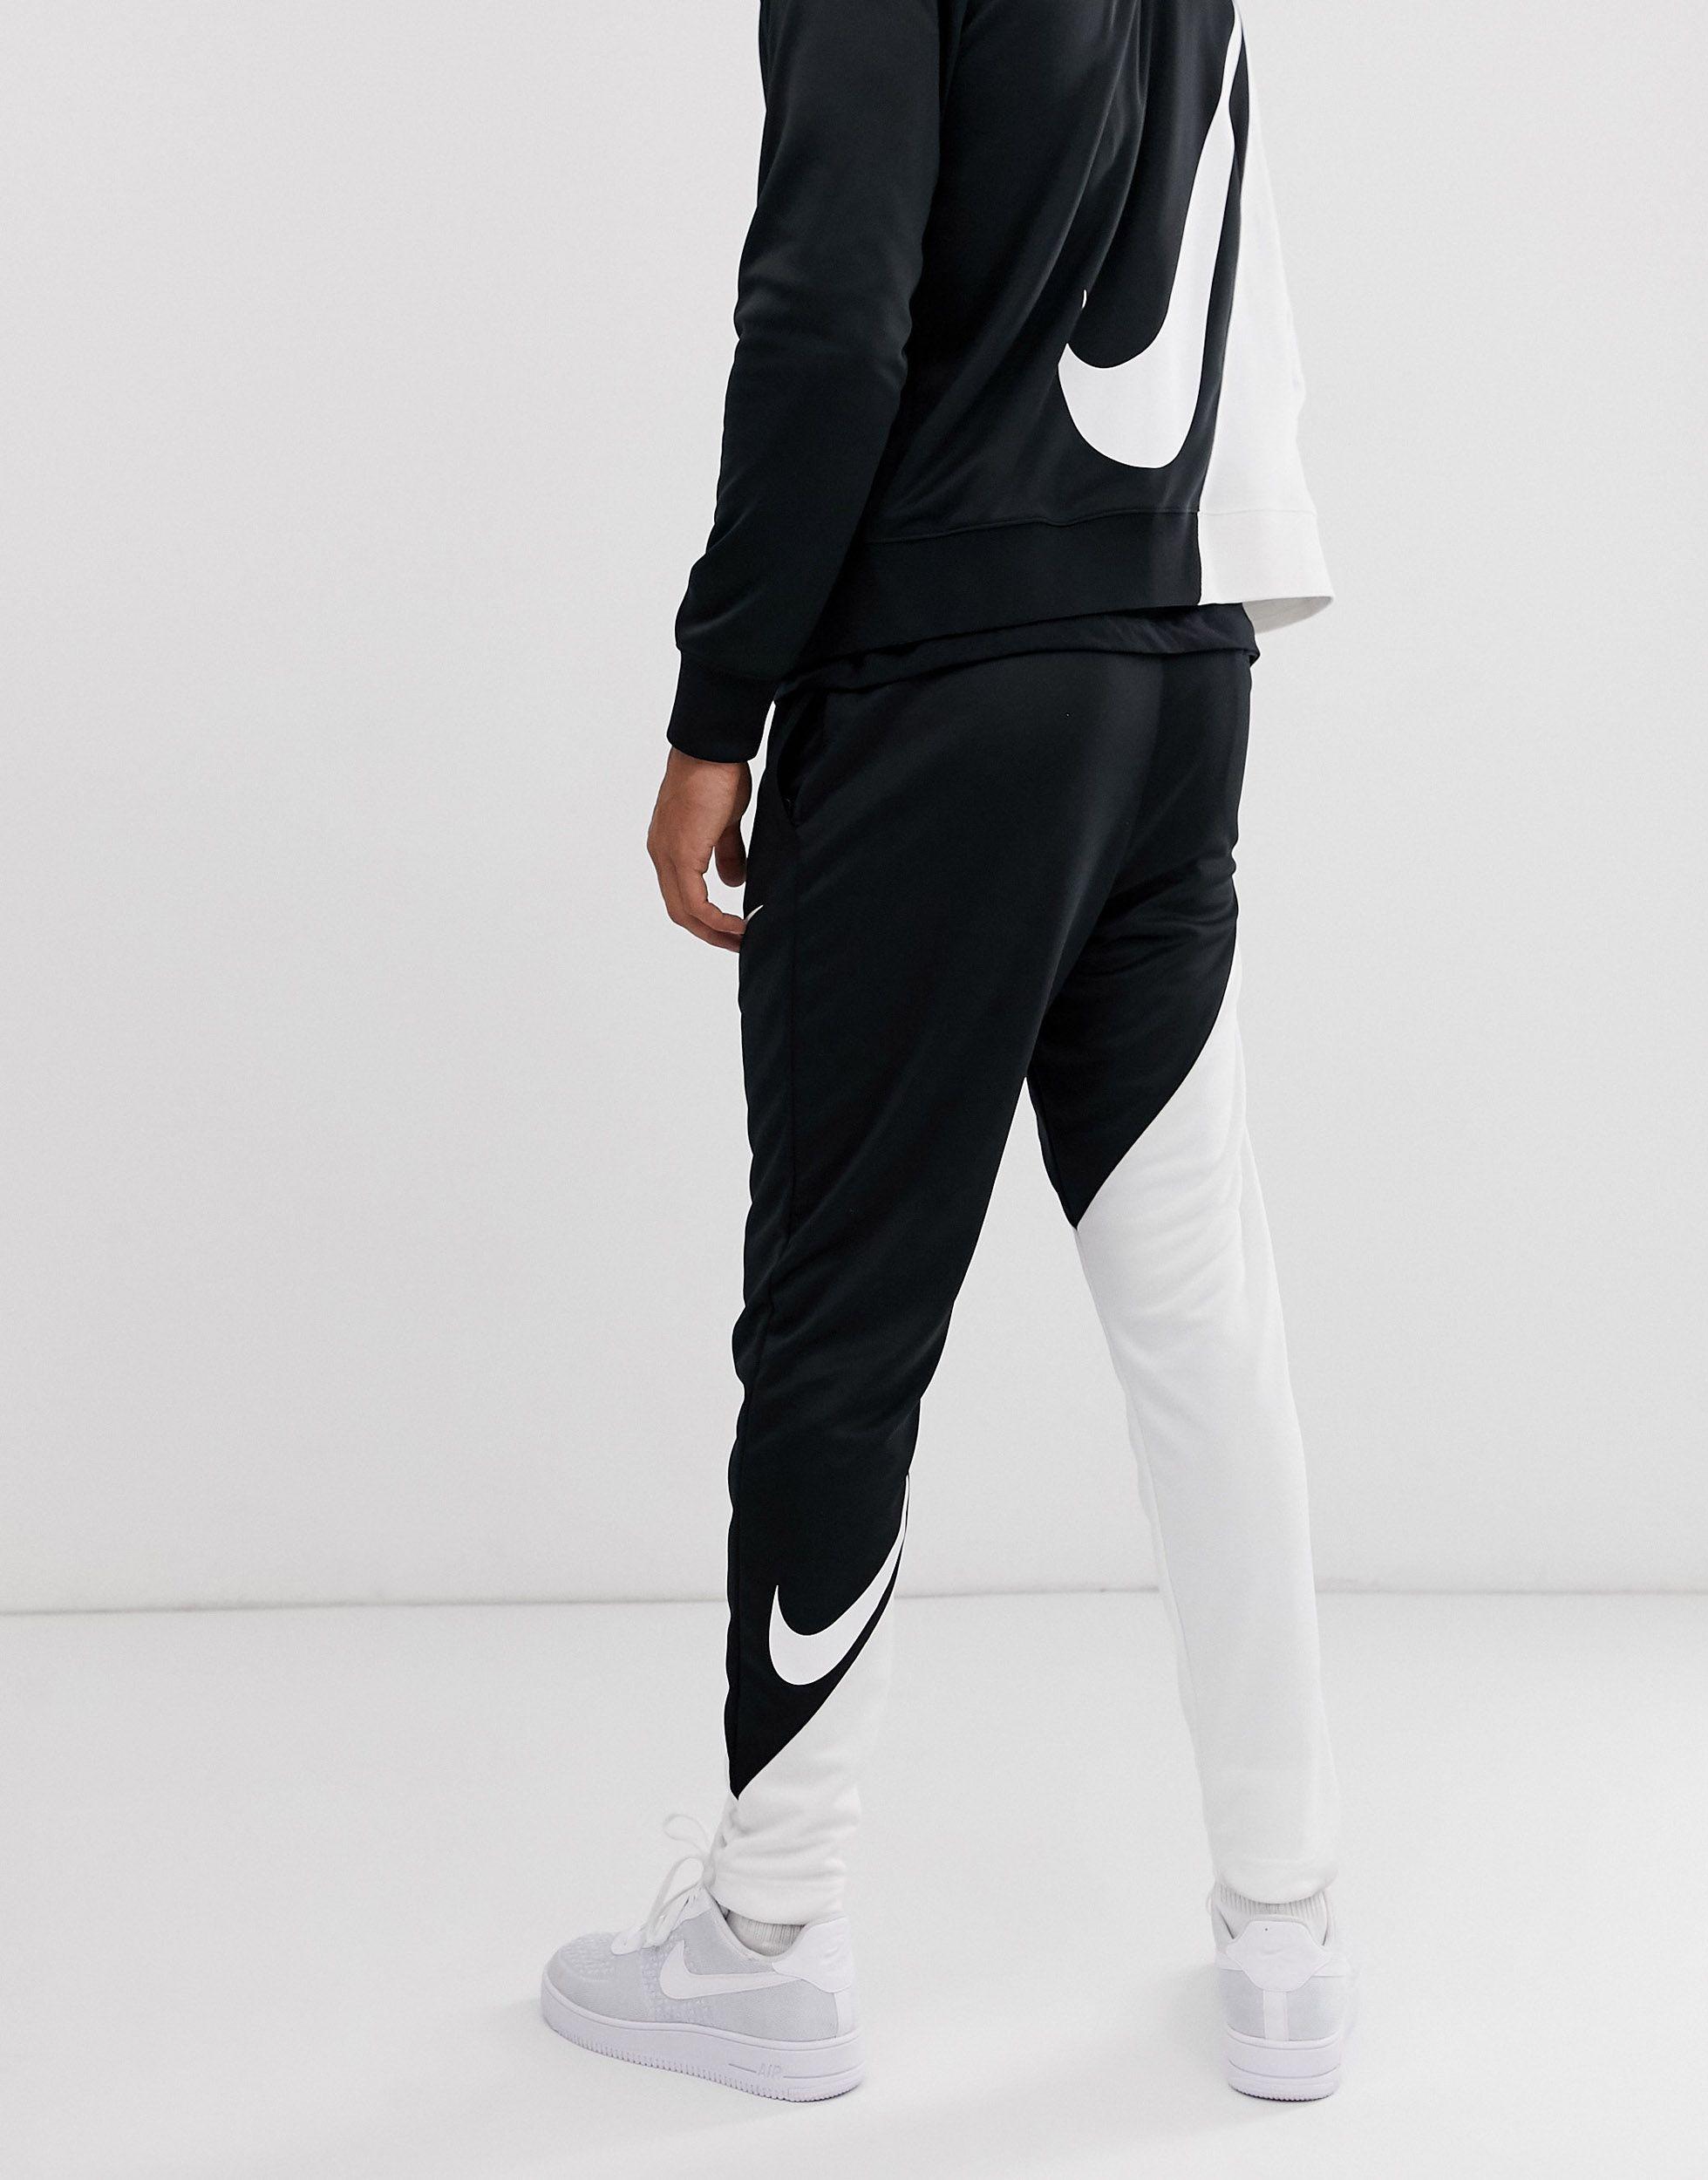 Nike Cotton Logo Contrast Sweatpants in Black for Men - Lyst